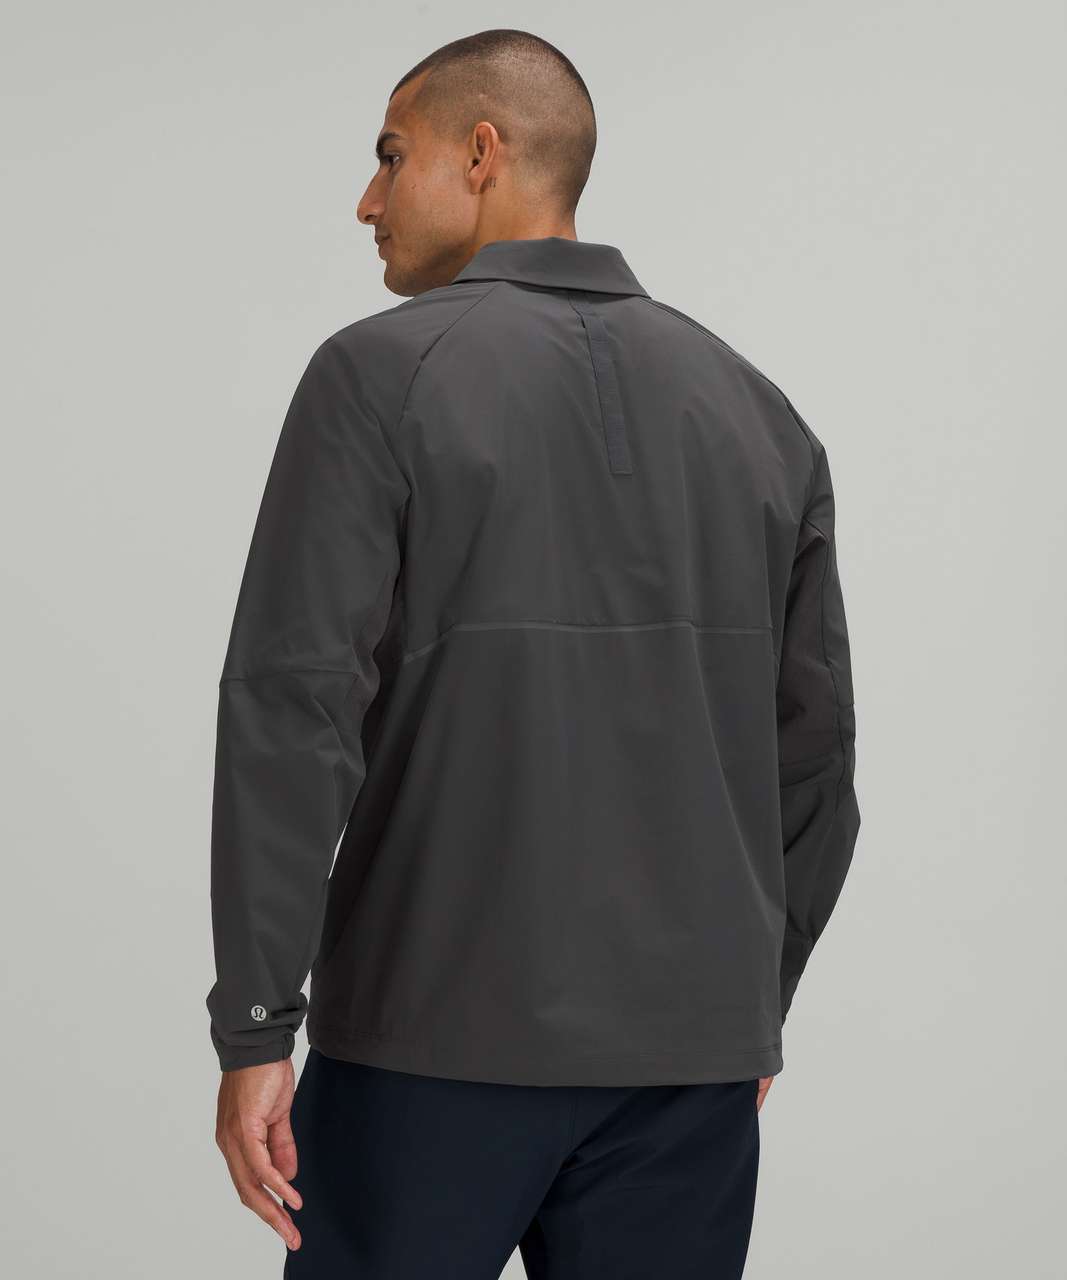 Lululemon Outdoor Tough Training Jacket - Graphite Grey